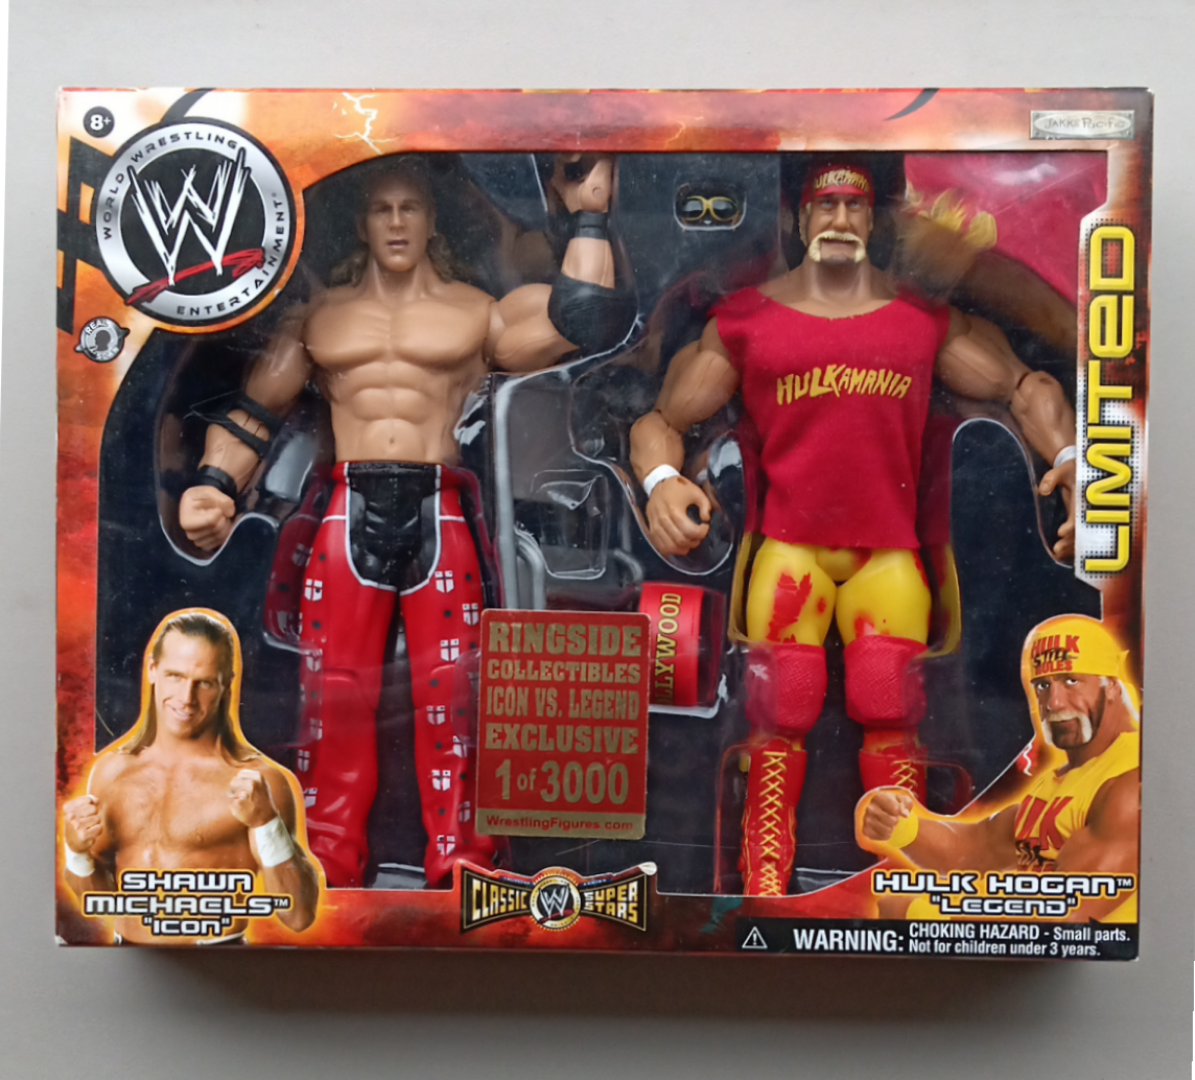 2005 WWE Jakks Pacific Classic Superstars Icon vs. Legend: Shawn Michaels vs. Hulk Hogan [Exclusive]